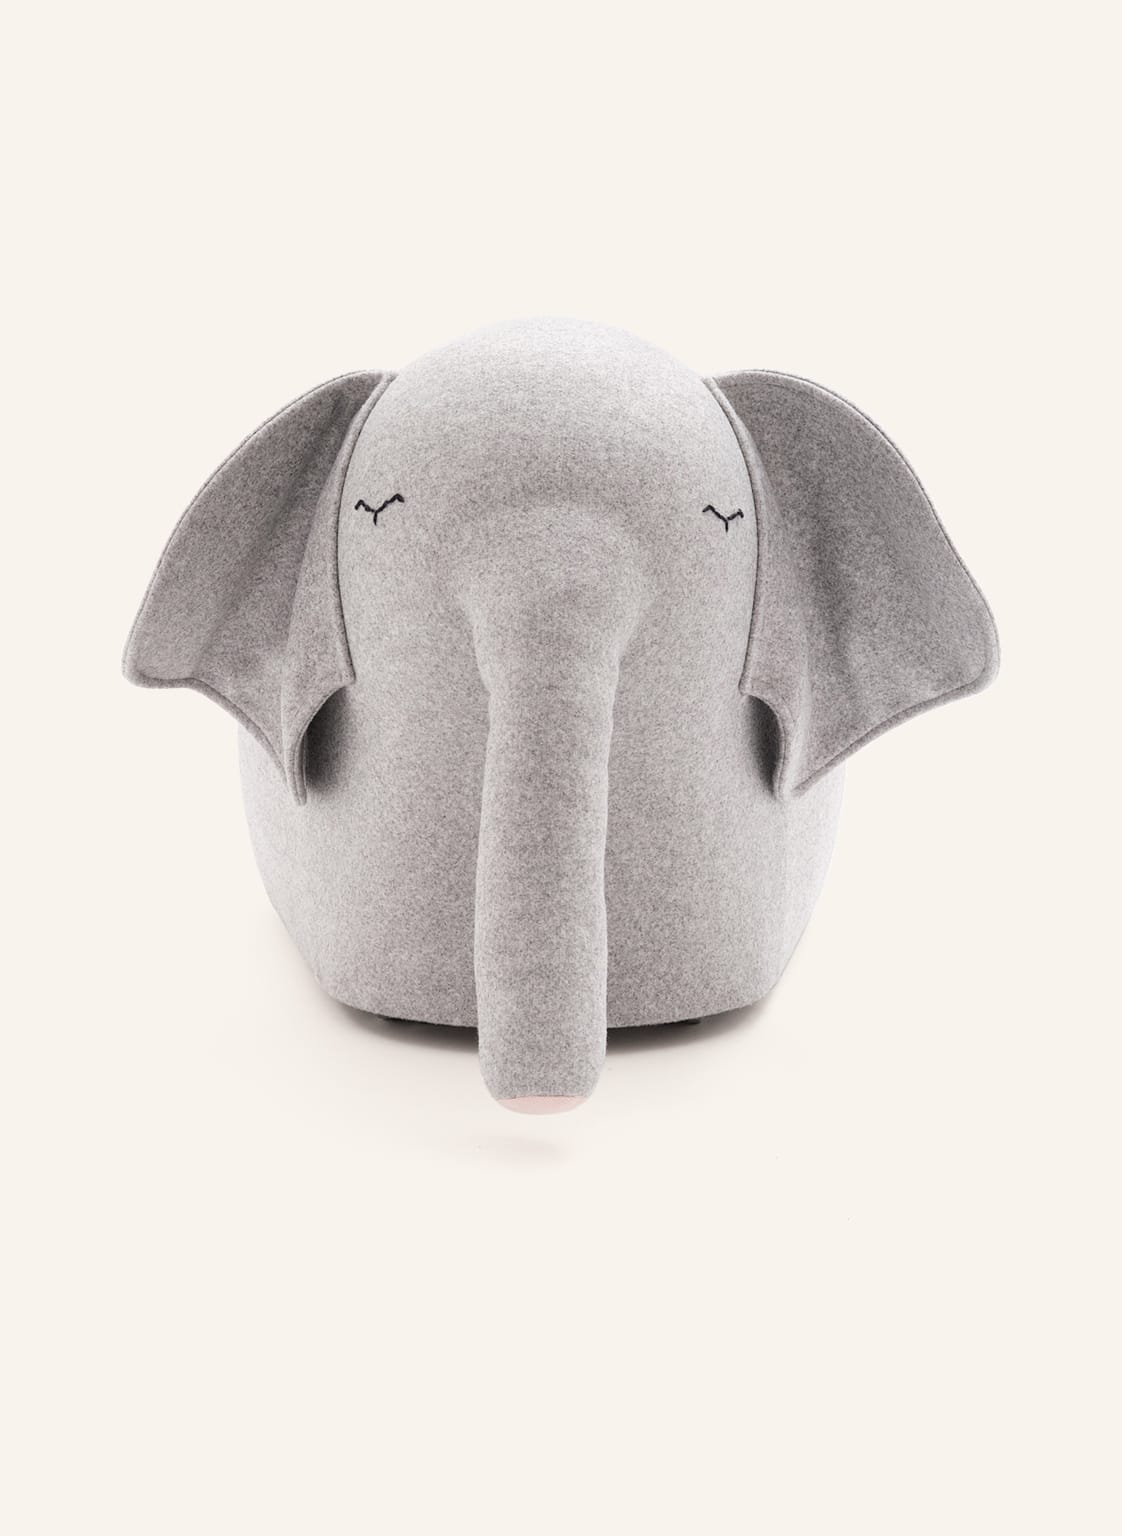 Image of Bada & Bou Spielzeug Rolling Elephant grau